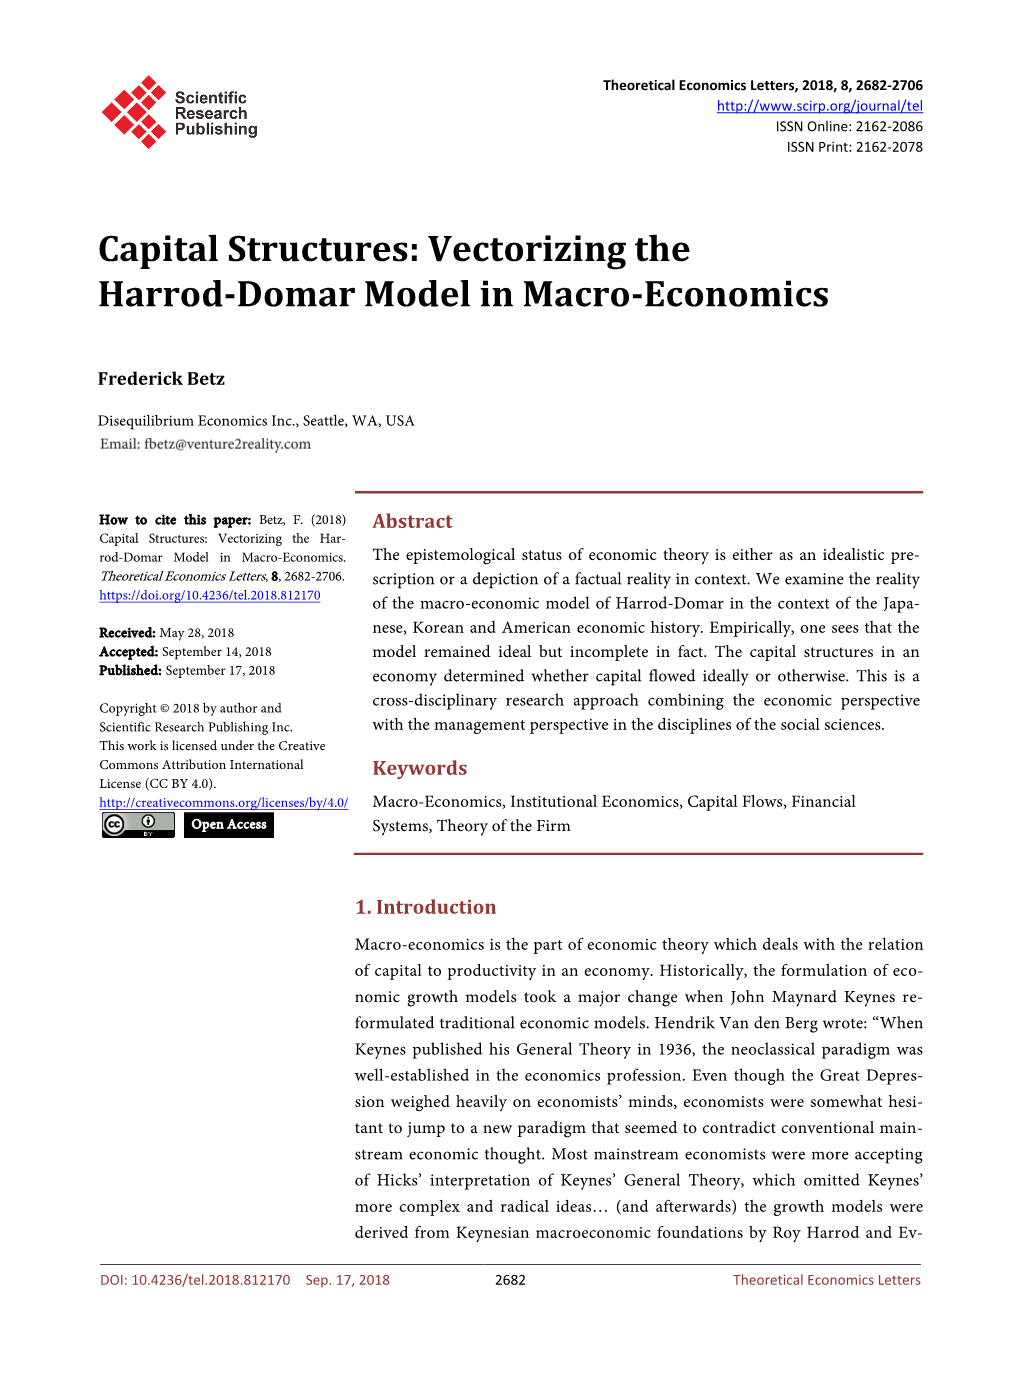 Vectorizing the Harrod-Domar Model in Macro-Economics